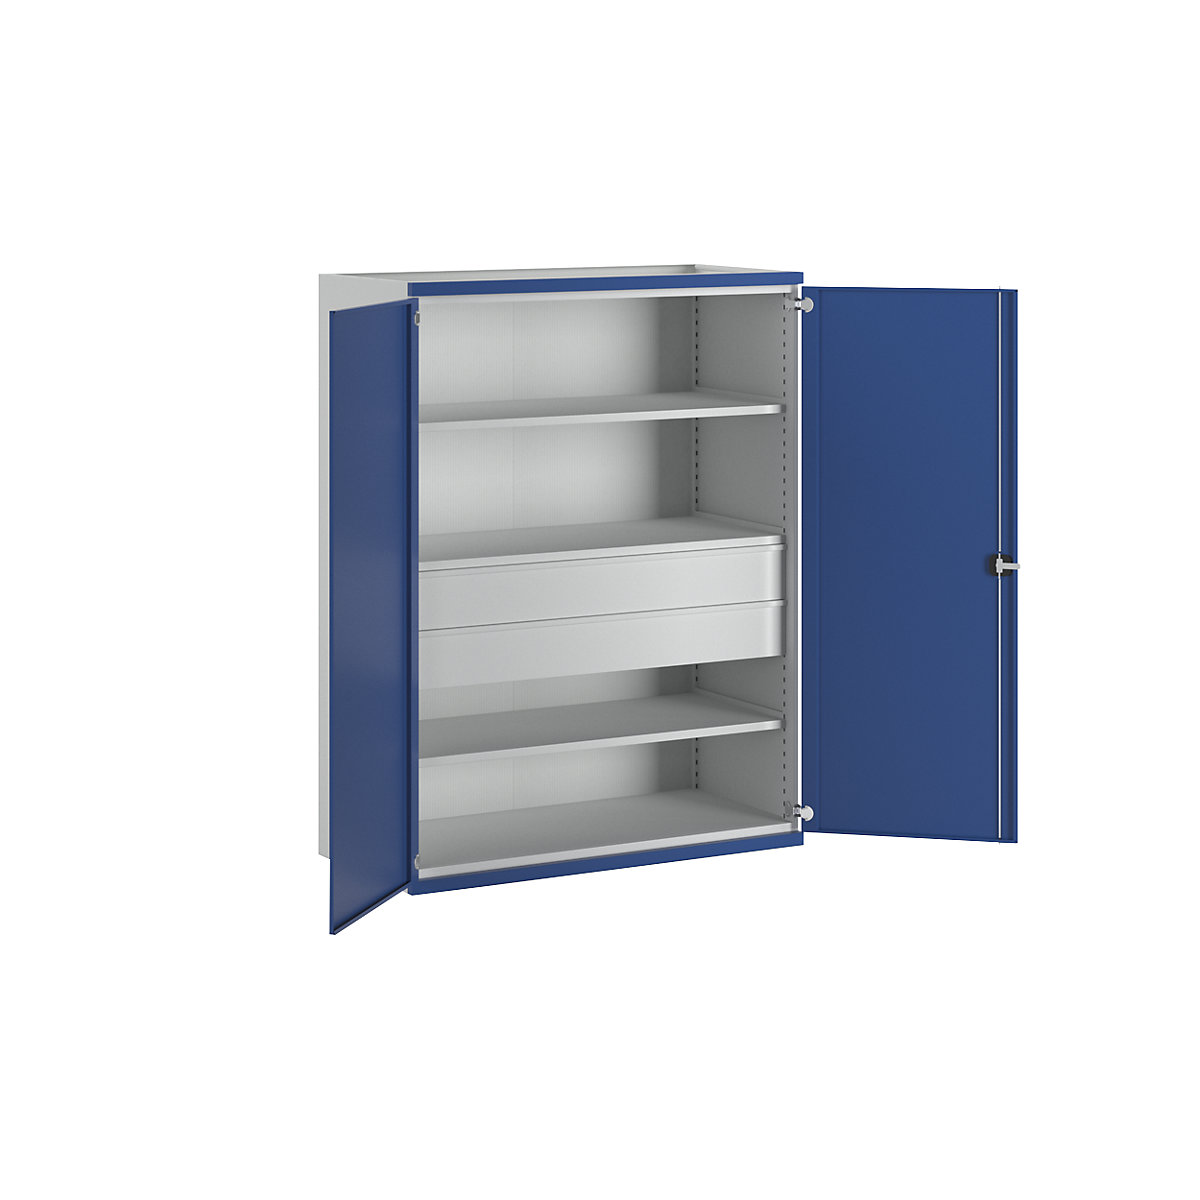 JUMBO heavy duty cupboard with 3 shelves – ANKE